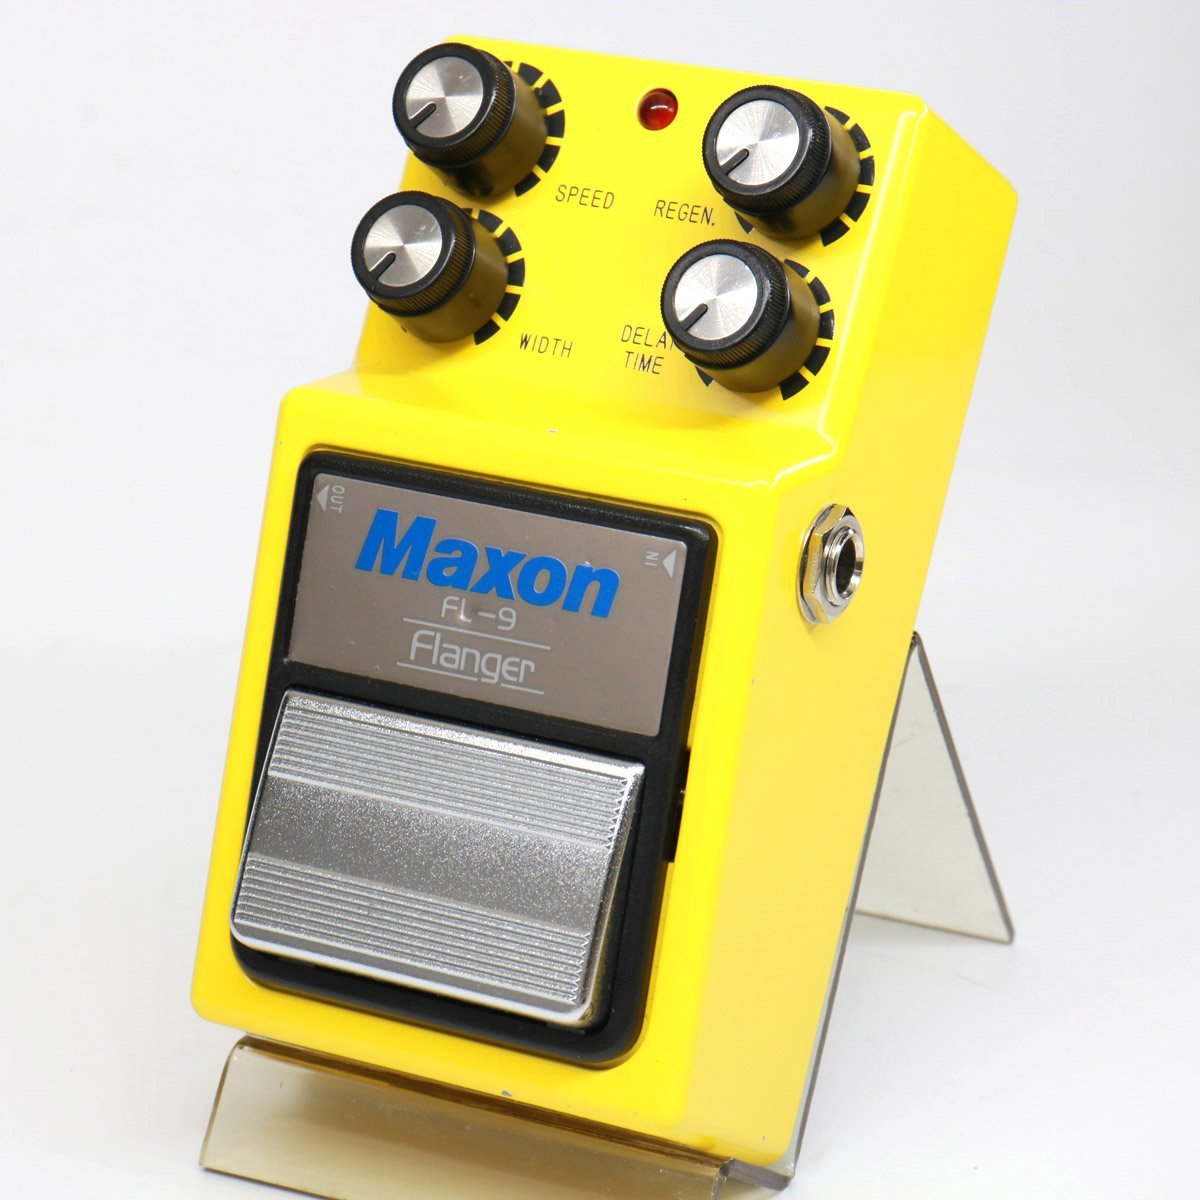 Maxon FL-9 エフェクター